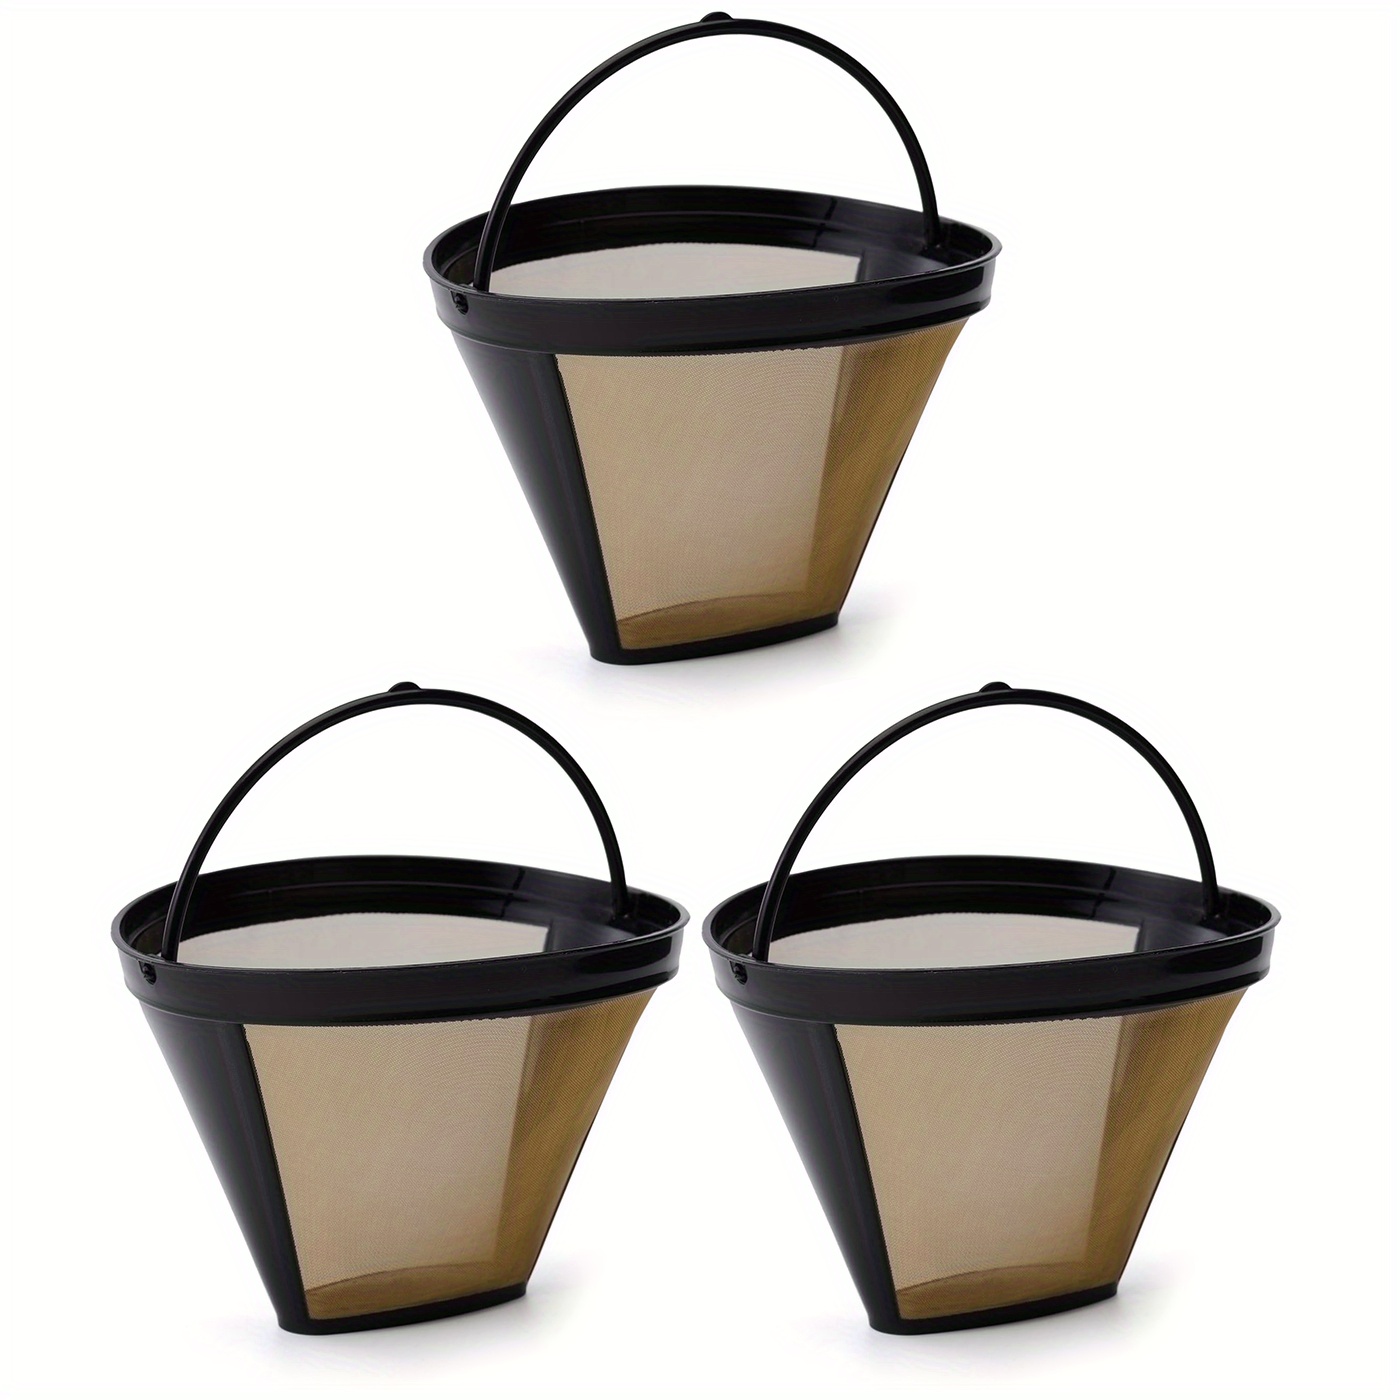 2pcs 4 cone Reusable Coffee Filter Basket for Ninja Dual Brew